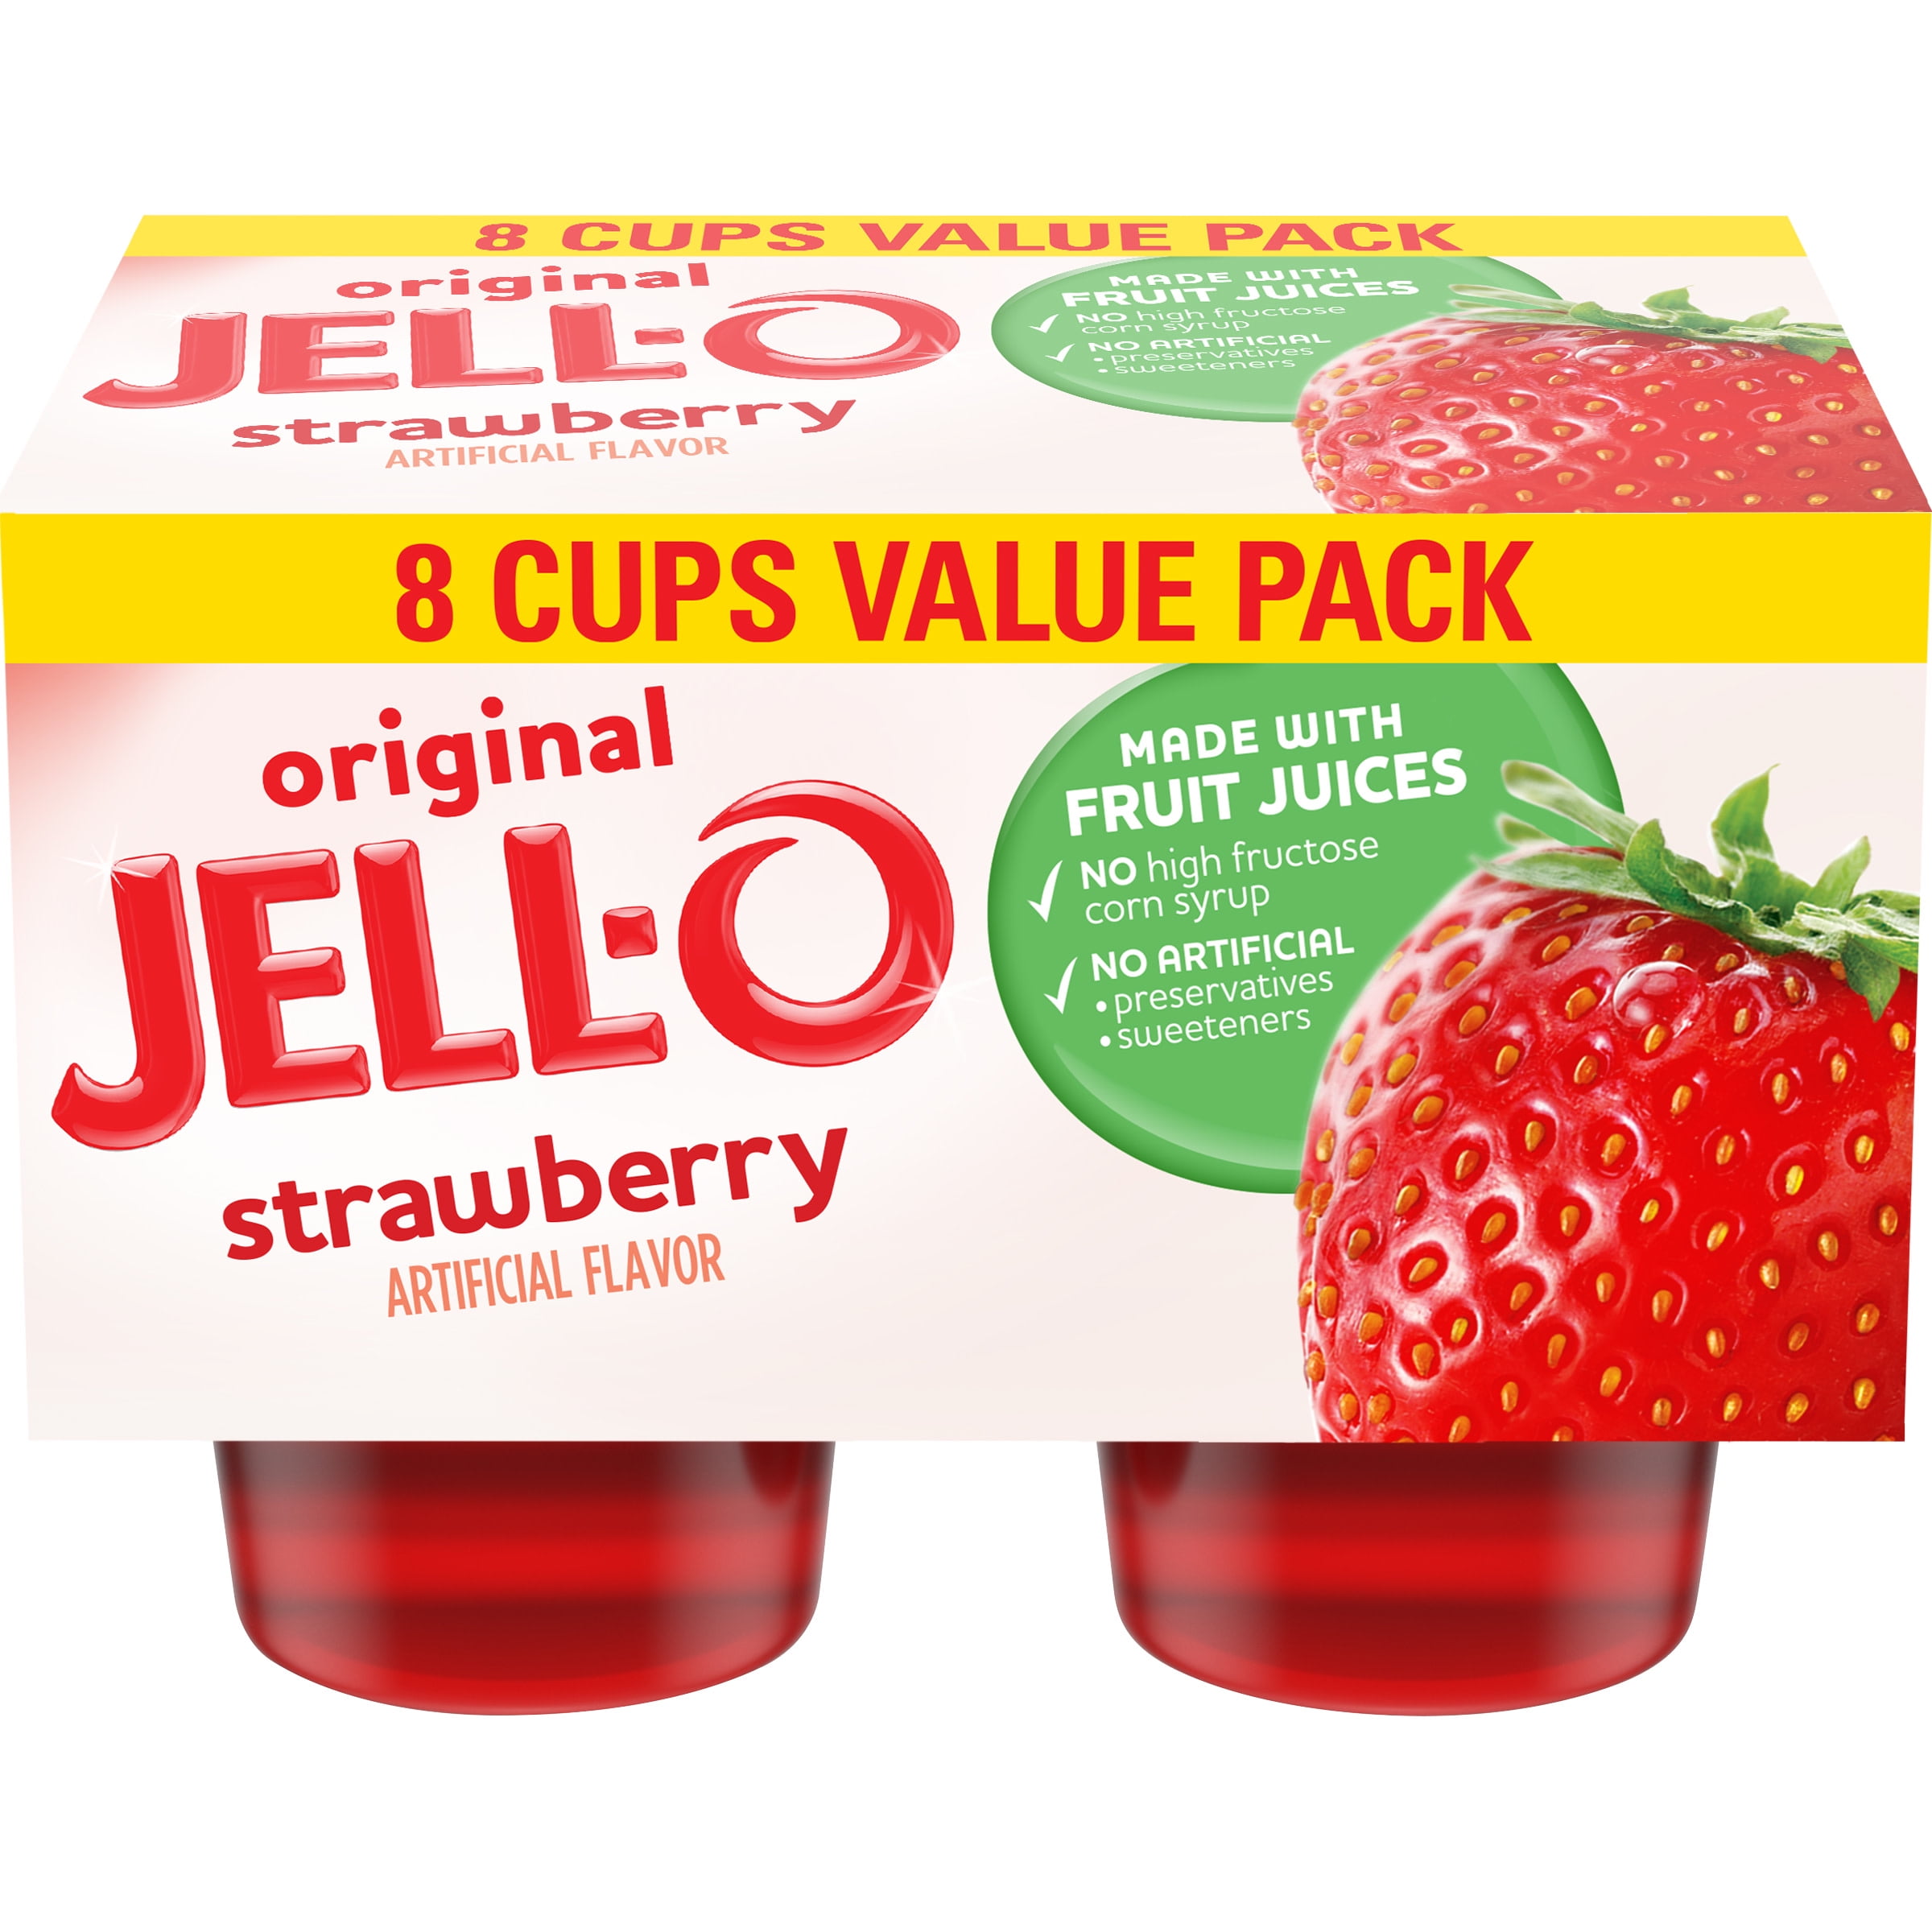 Jell-O Original Strawberry Jello Cups Gelatin Snack Value Pack, 8 Ct Cups -  